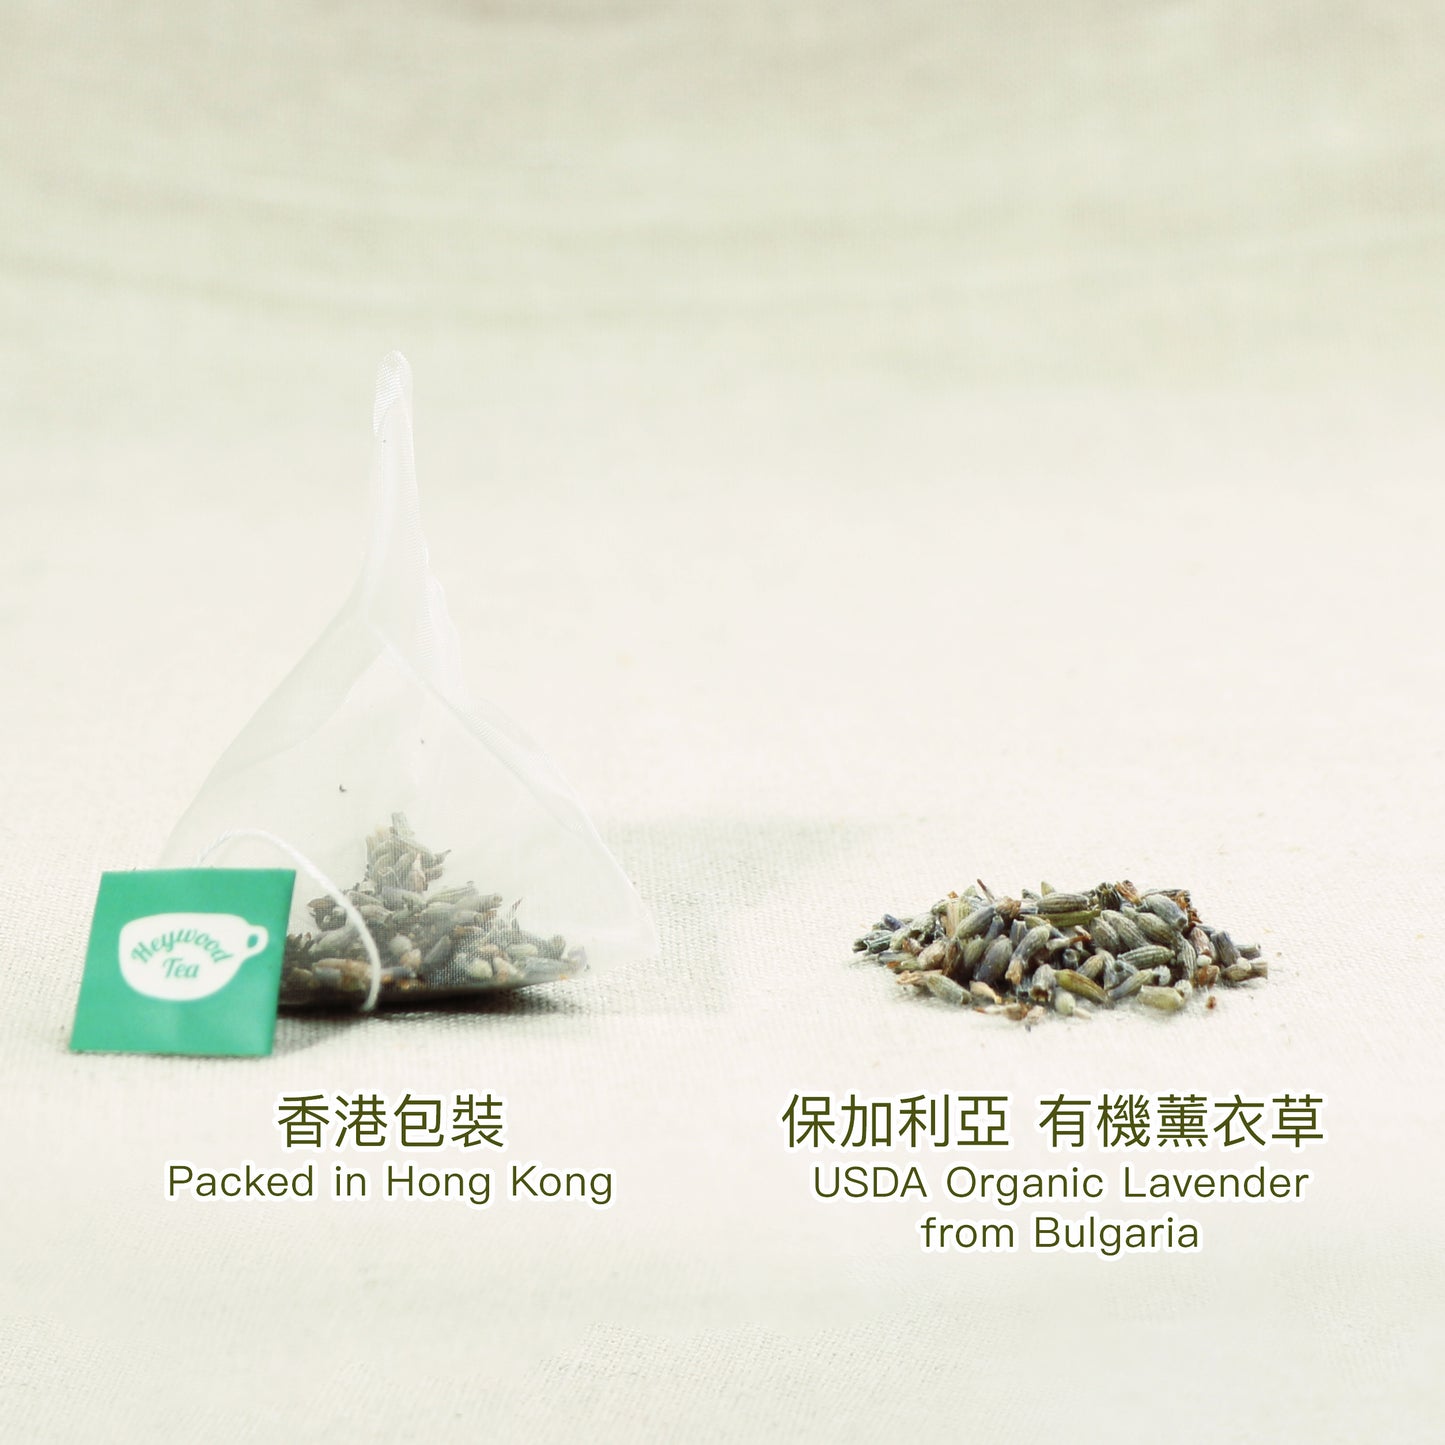 Heywood Tea Lavender Tea with Chammomile 薰衣草洋甘菊茶